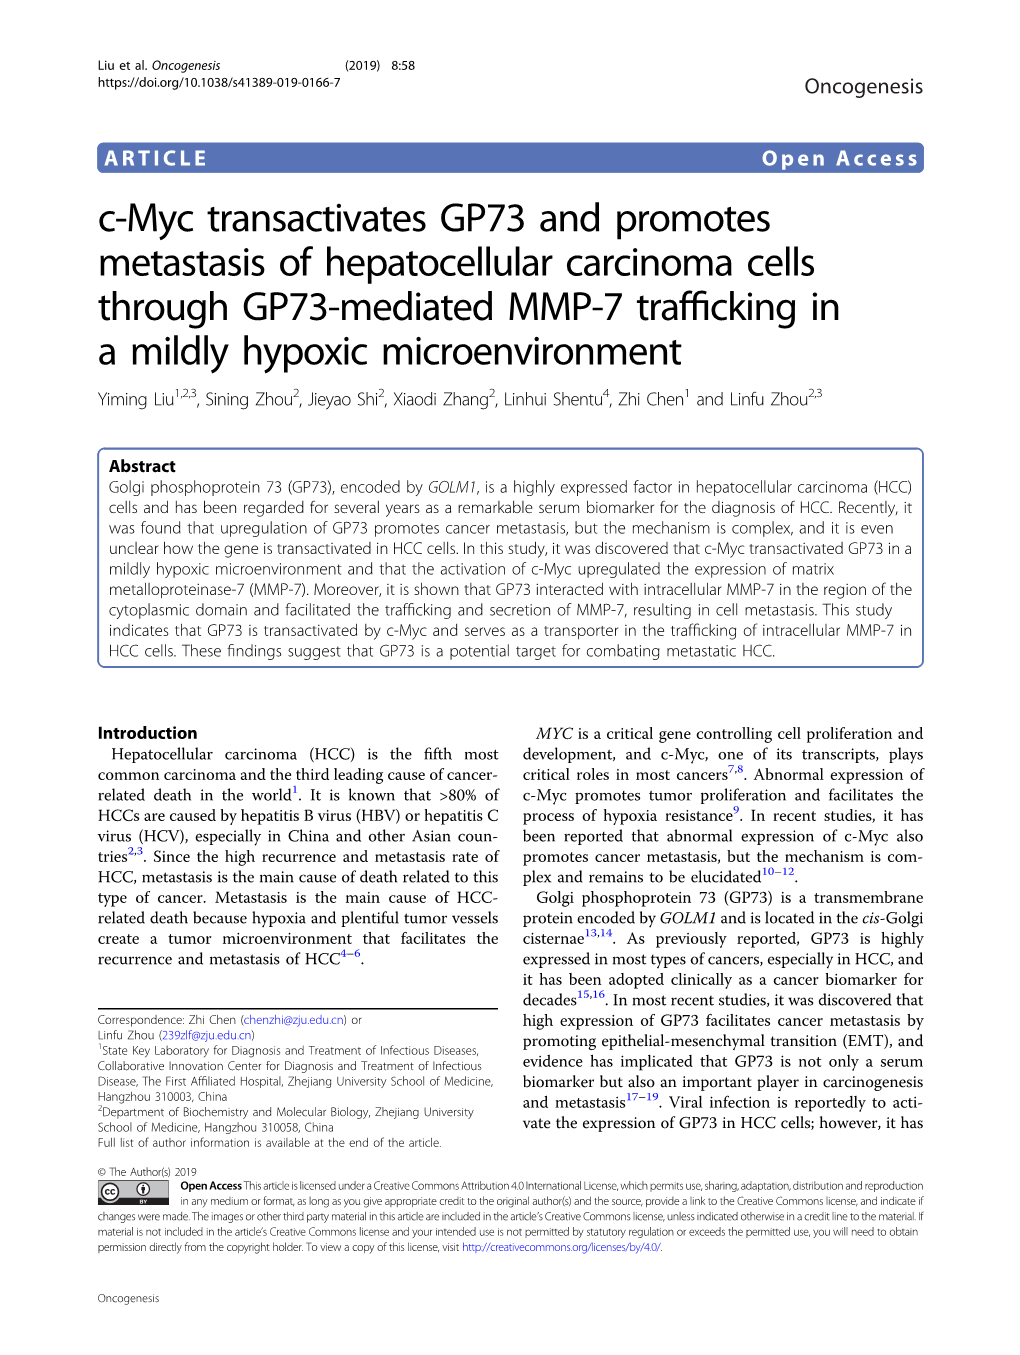 C-Myc Transactivates GP73 and Promotes Metastasis Of